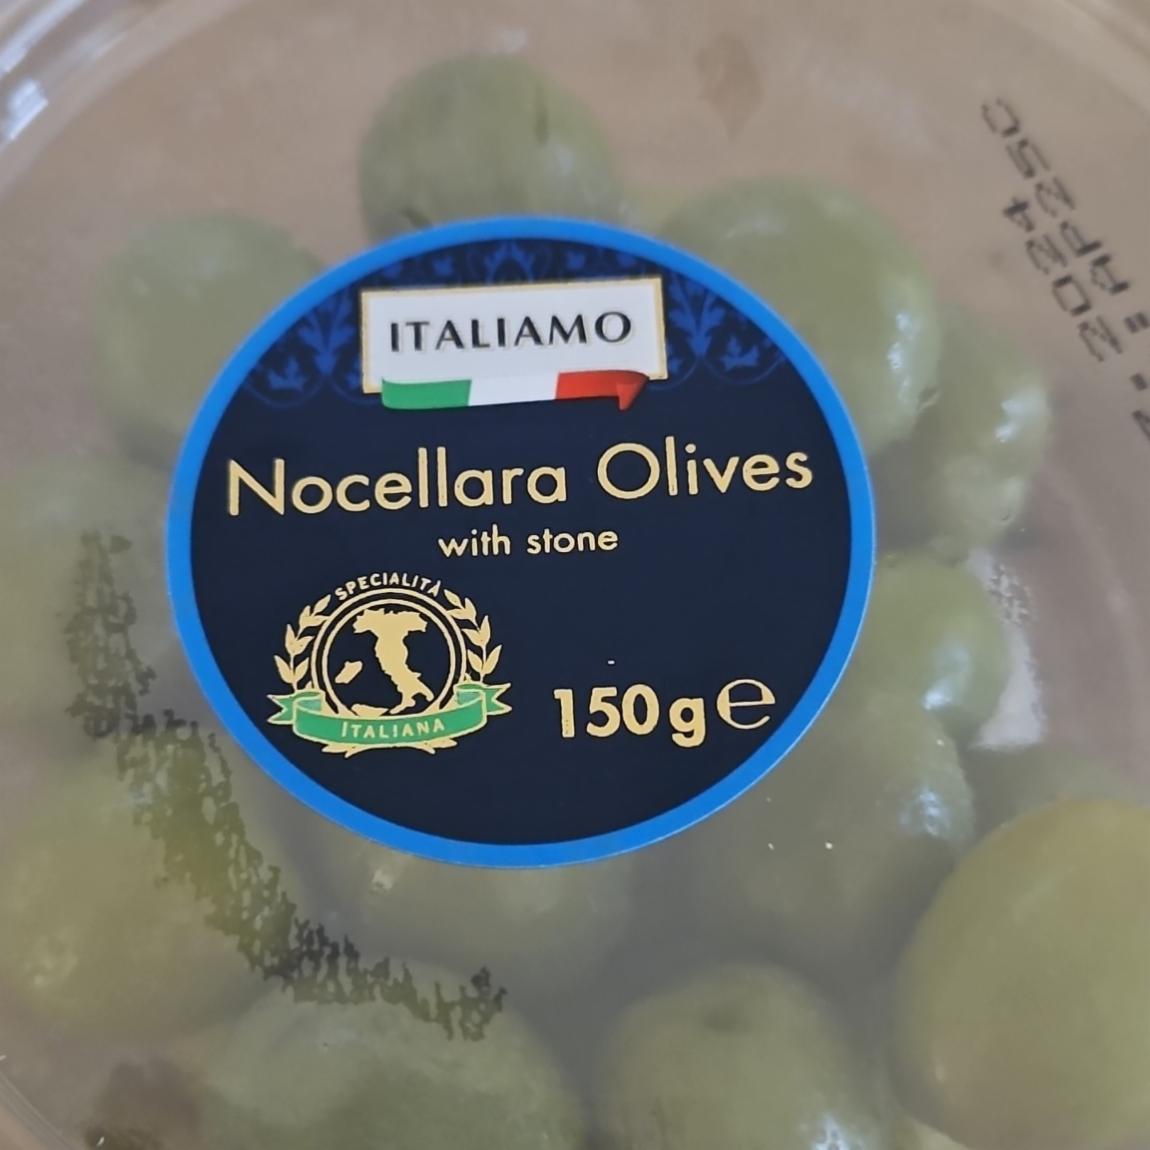 Fotografie - Nocellara Olives with stone Italiamo